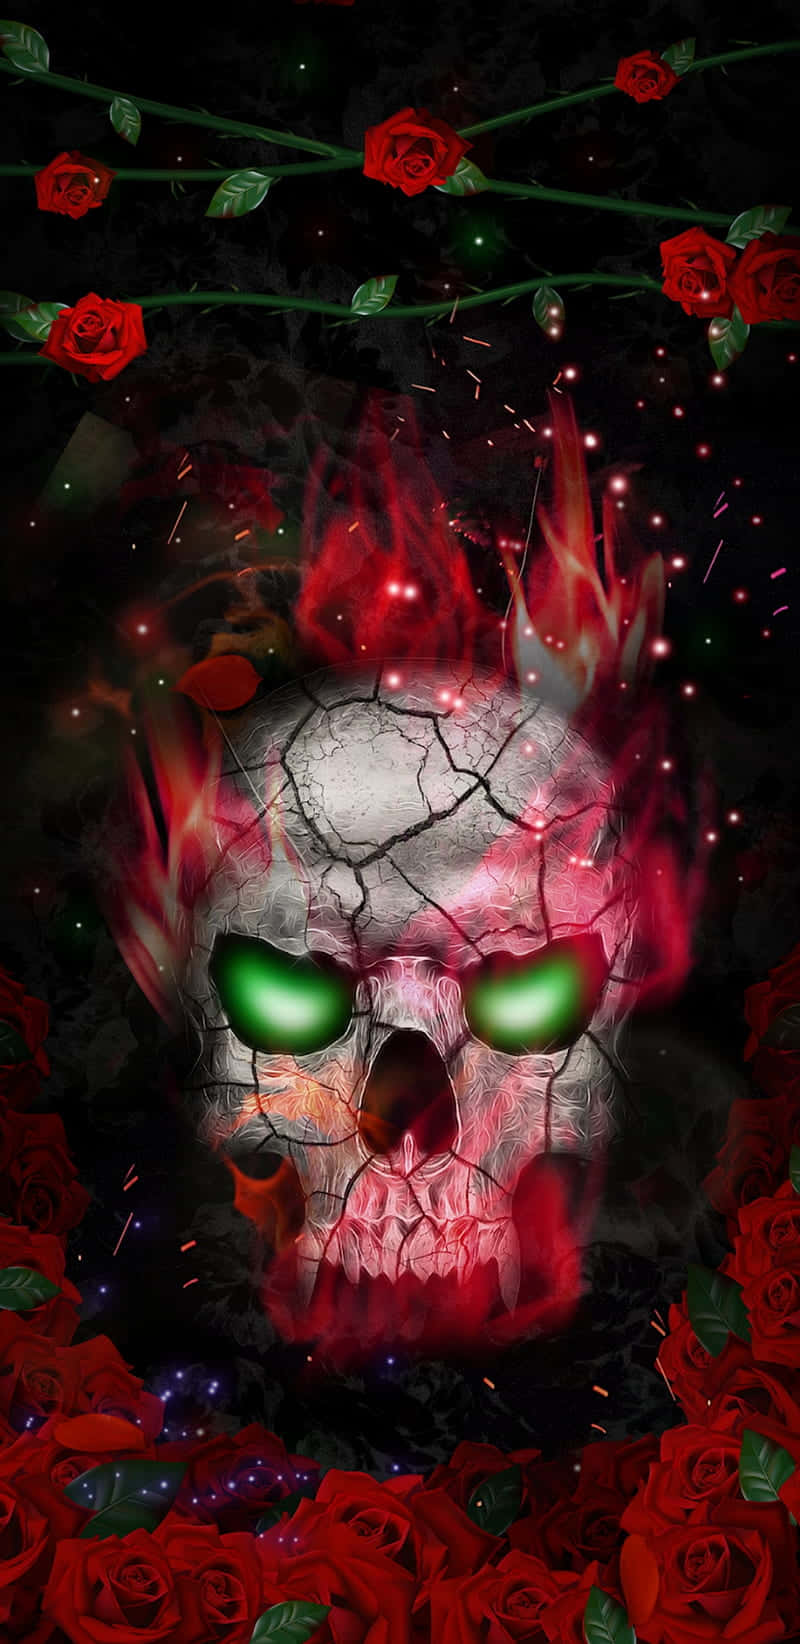 Flaming Skull in the Twilight Sky Wallpaper